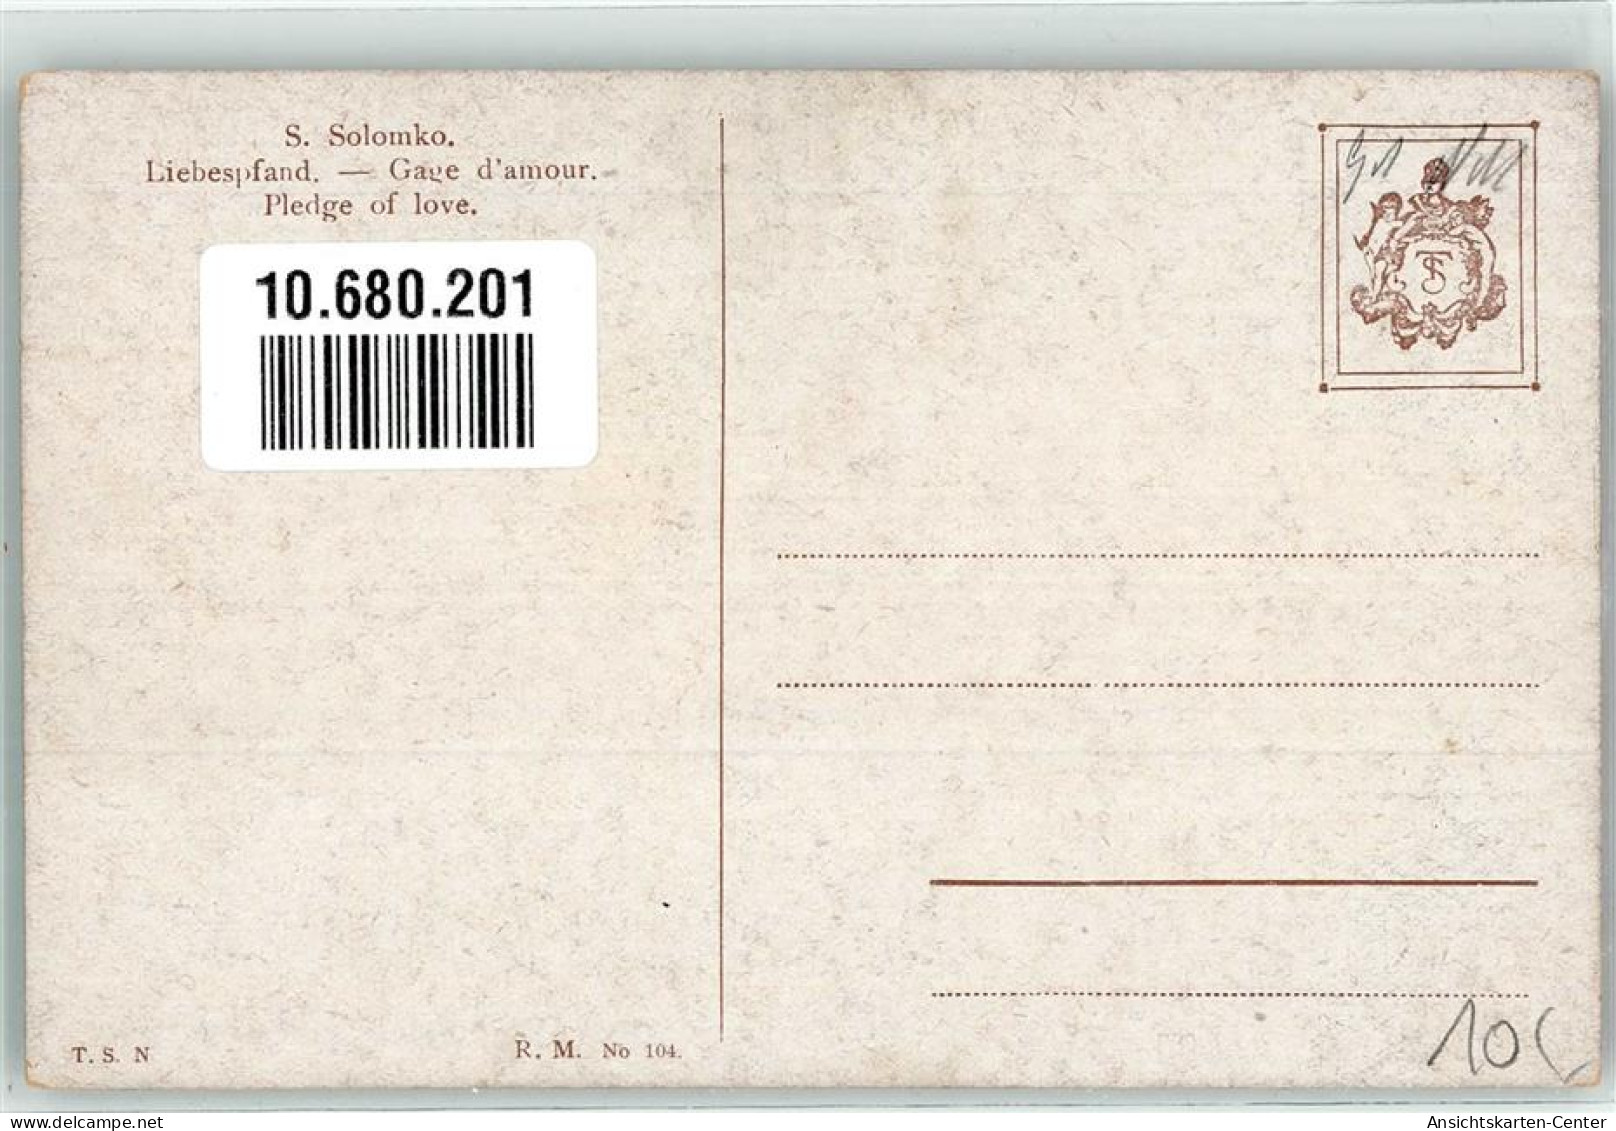 10680201 - Tracht Liebespfand Verlag TSN Nr. 104 - Solomko, S.